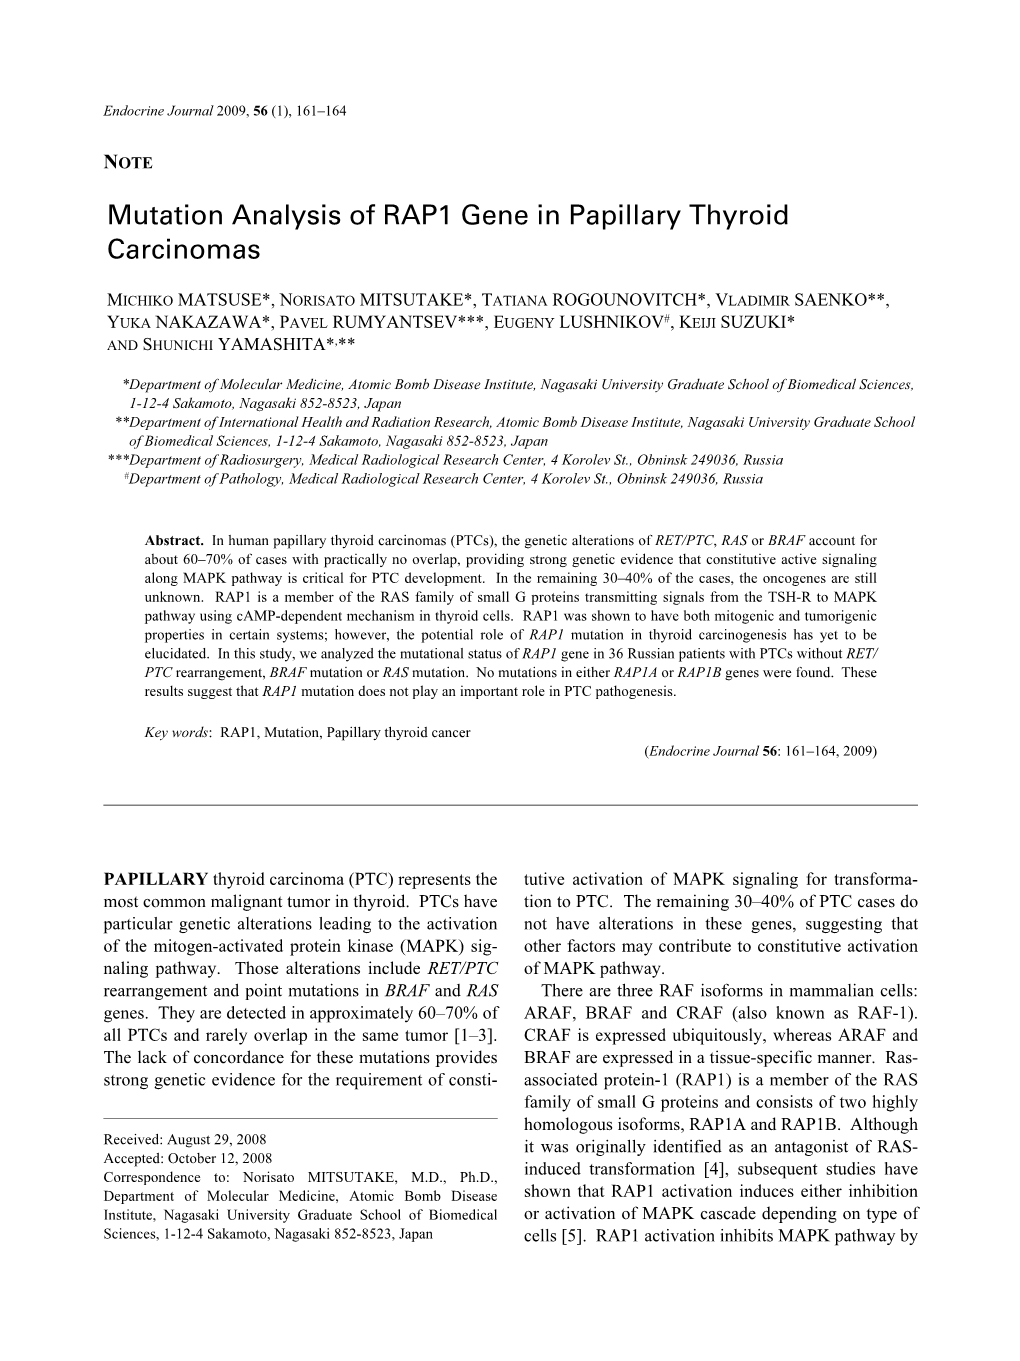 Mutation Analysis of RAP1 Gene in Papillary Thyroid Carcinomas